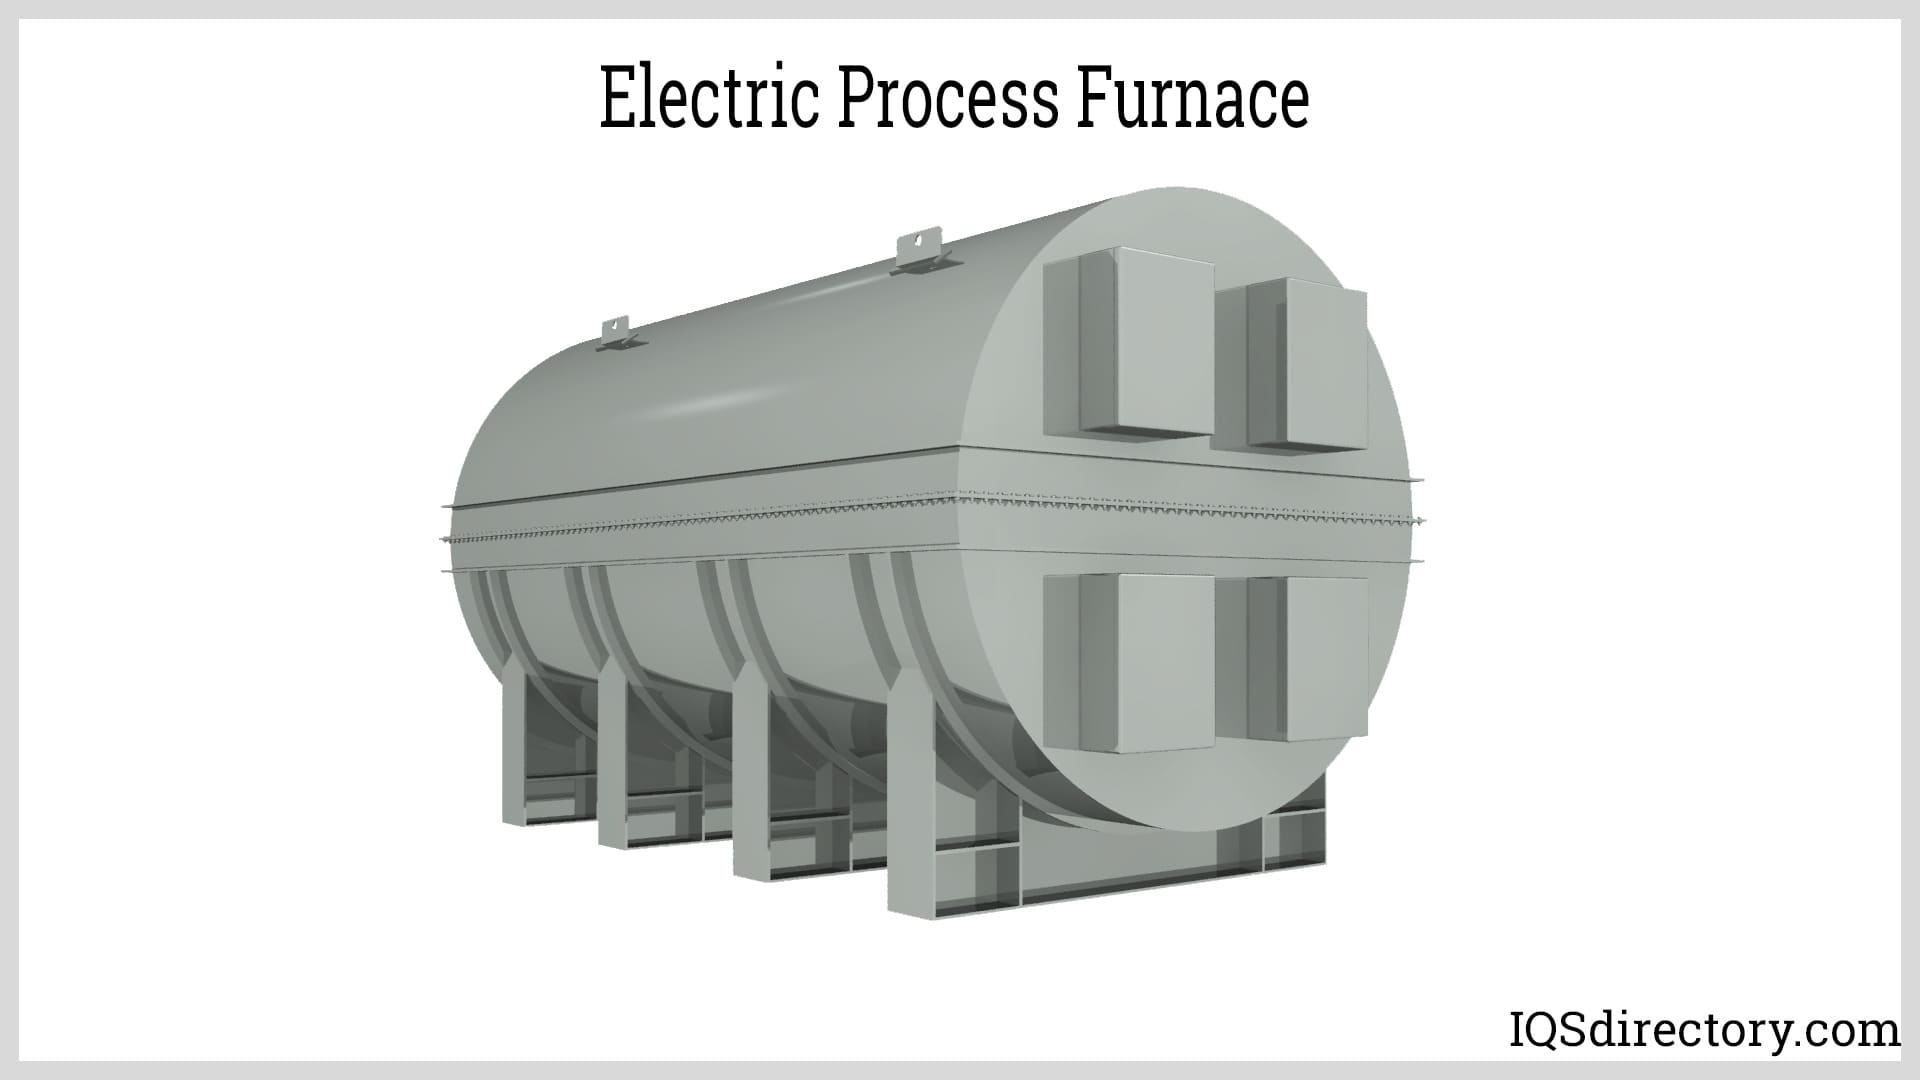 Electric Process Furnace